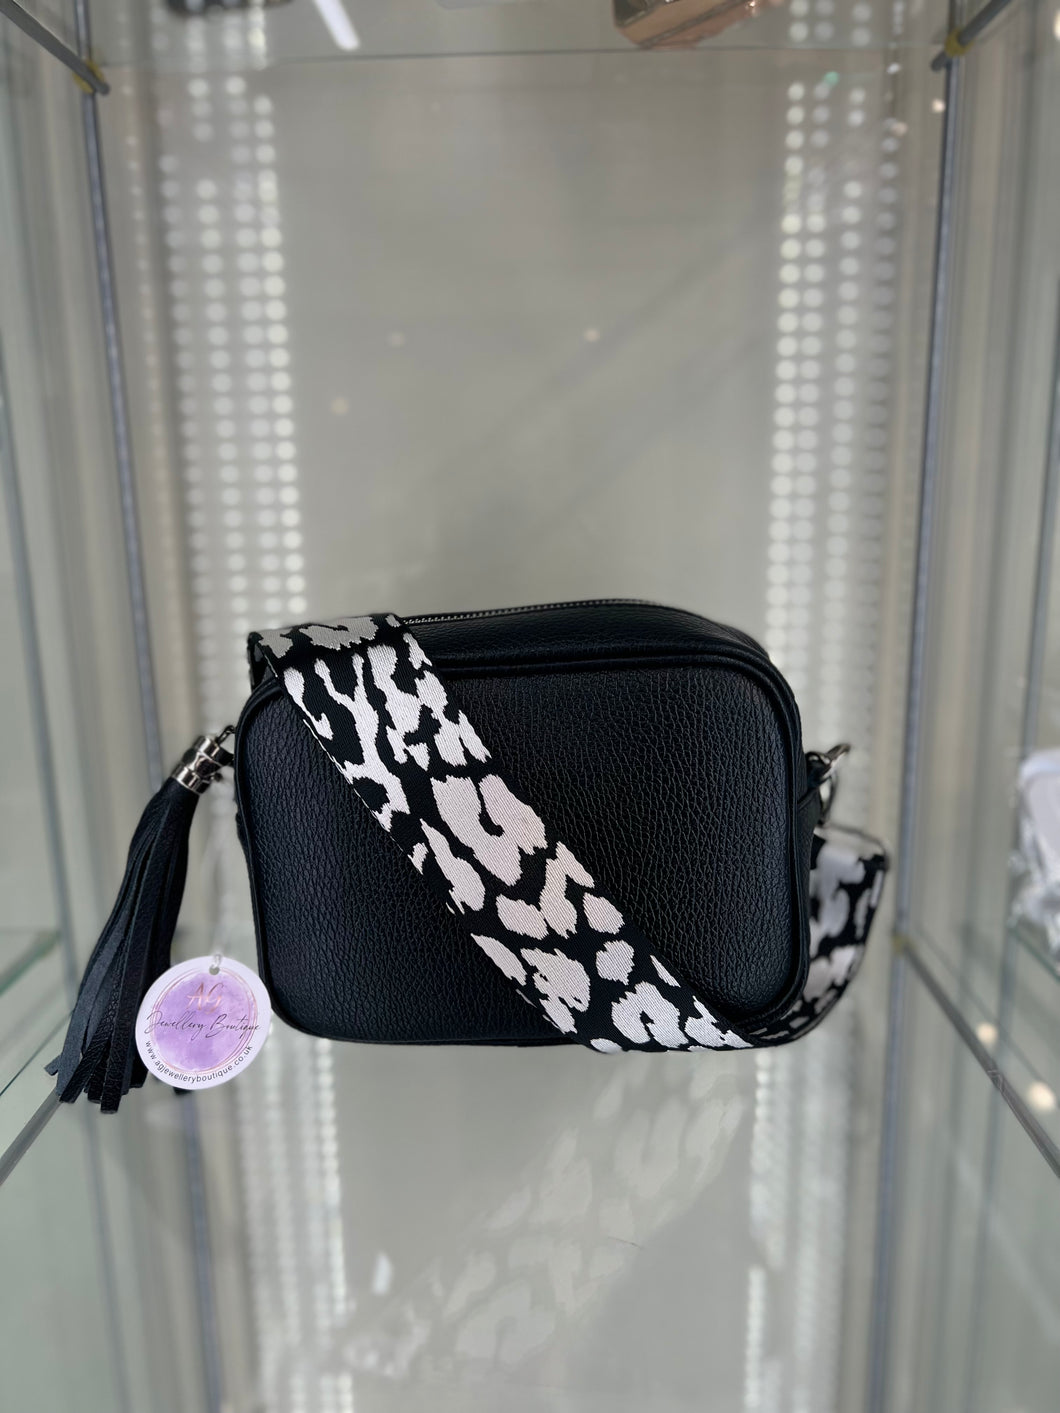 Real leather Black crossbody bag with  animal print black/white strap